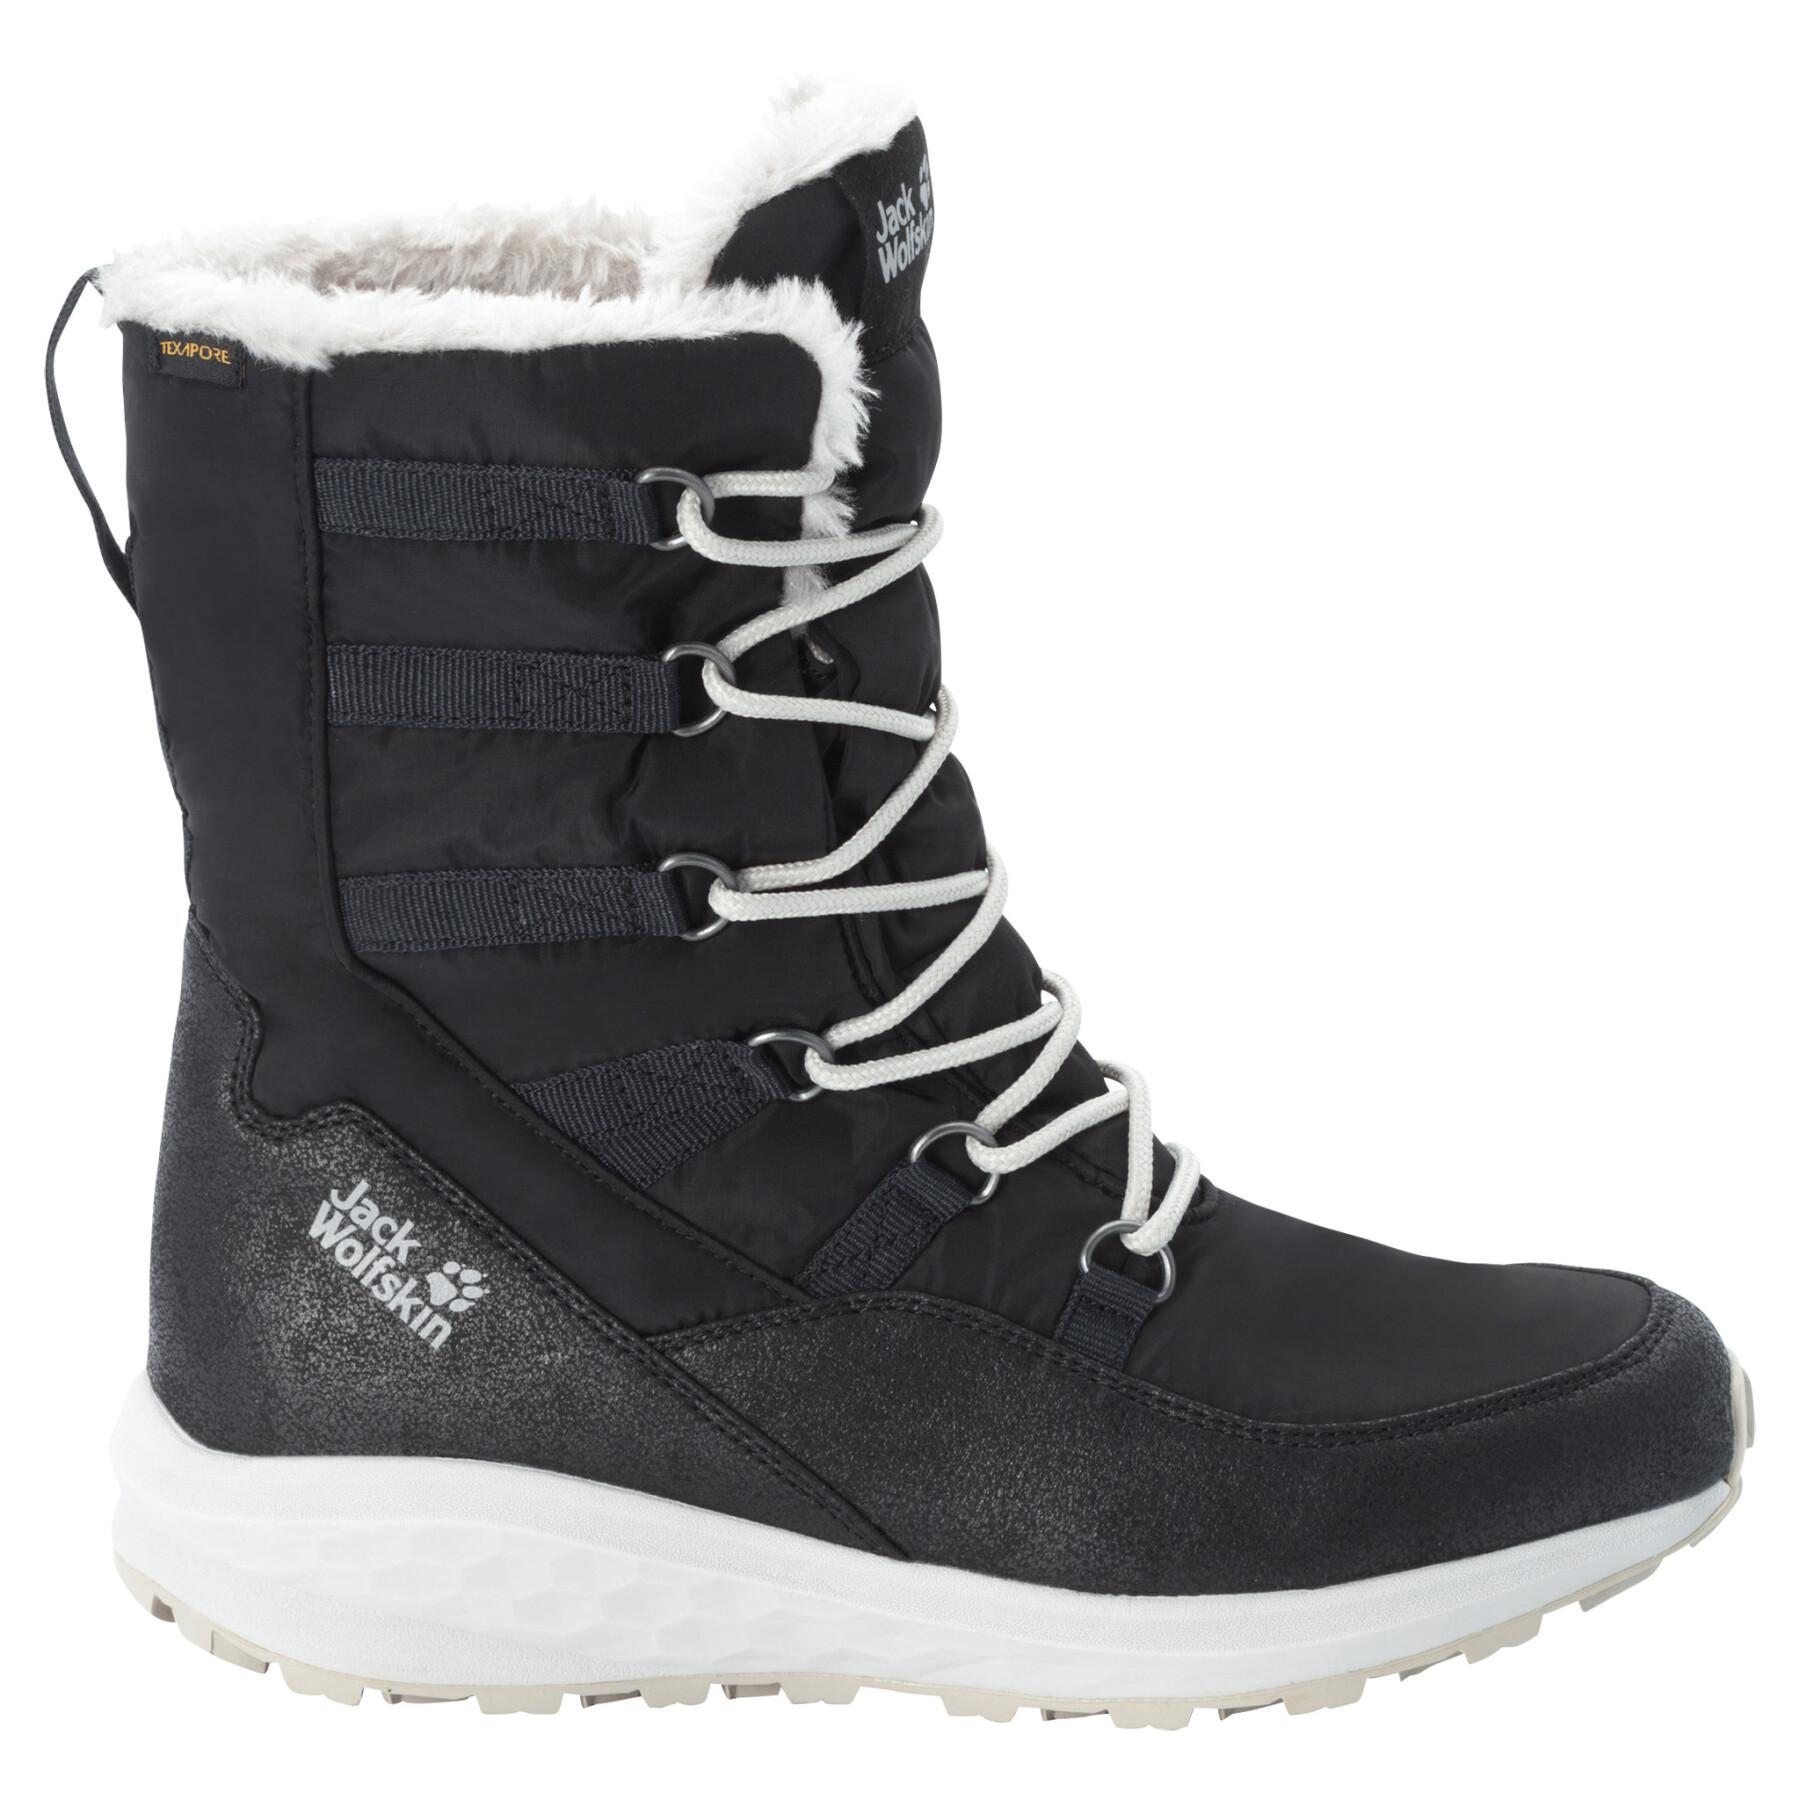 Women's boots Jack Wolfskin nevada texapore high